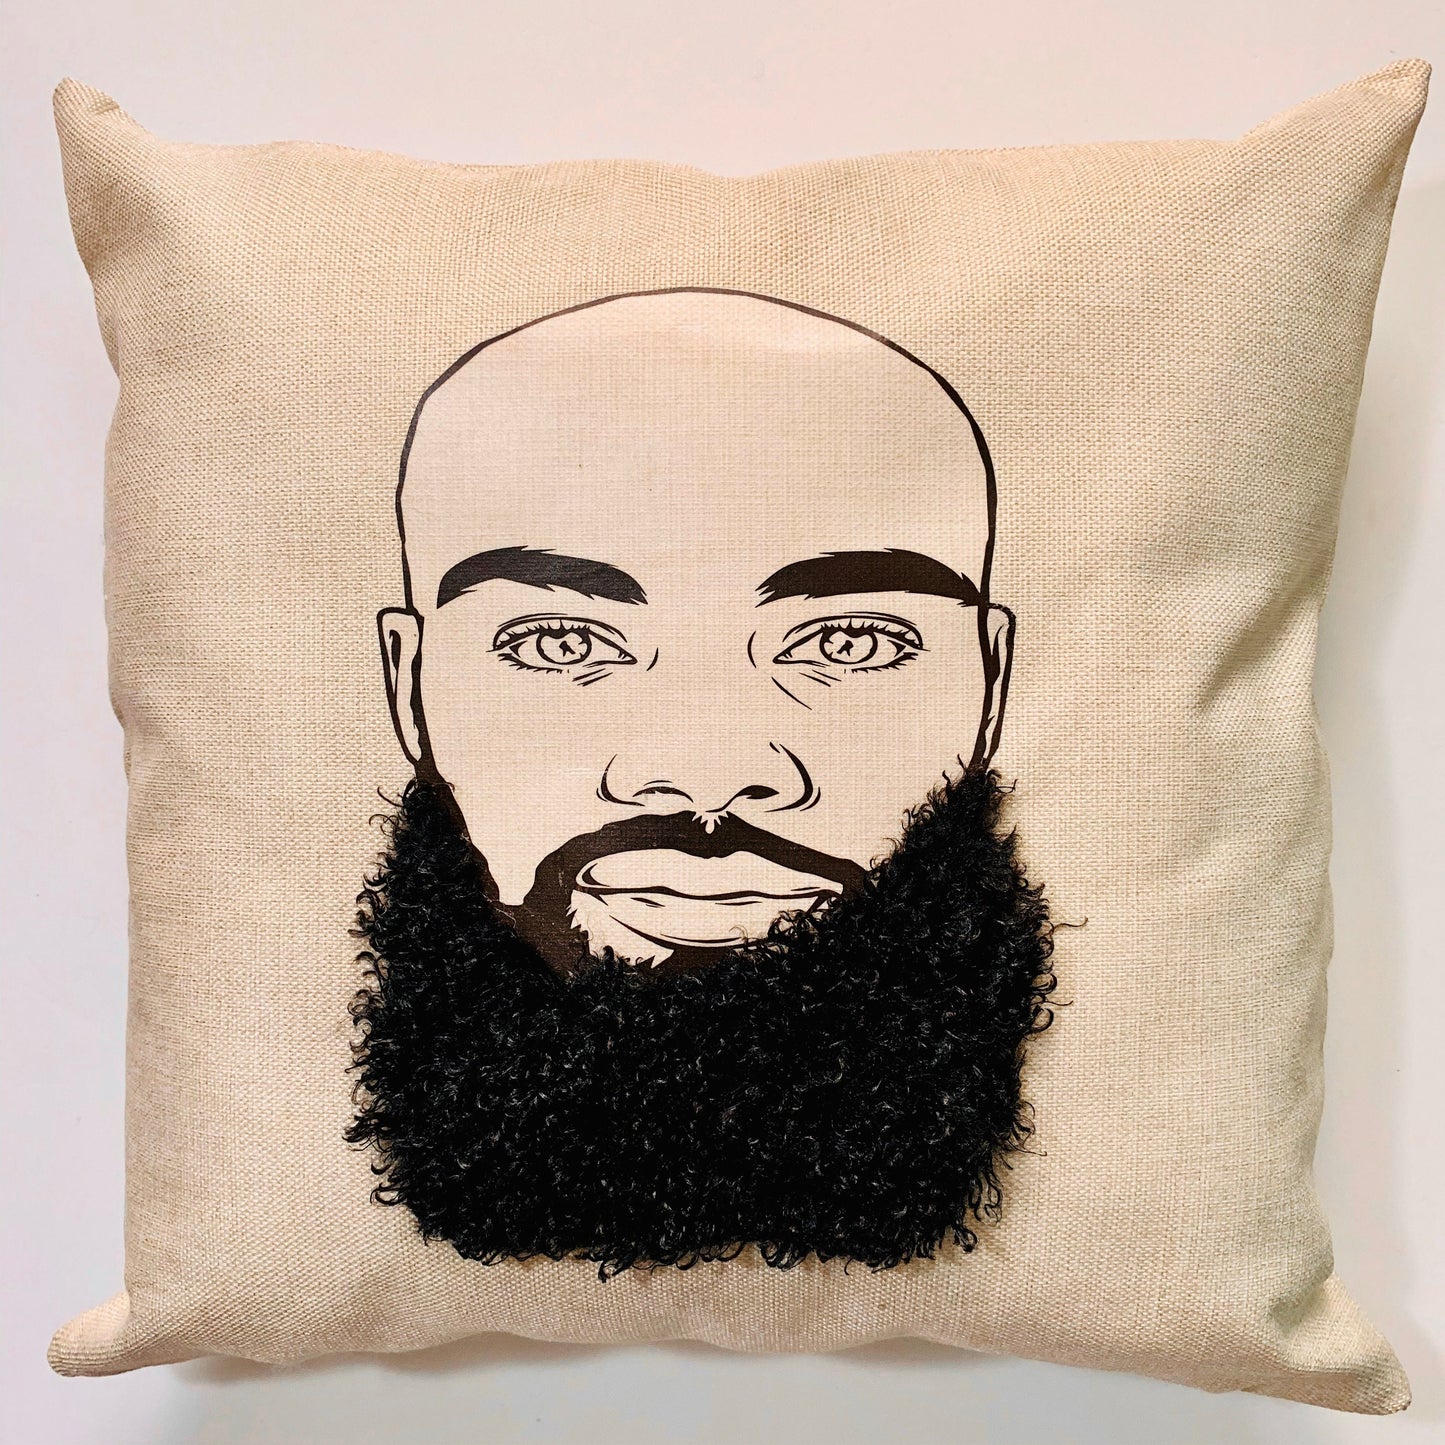 Bald Beard Man Handmade Throw Pillow with Custom Printed Pillow Cushion Cover Decorative Throw Pillow for Home Décor 16 x 16 inches